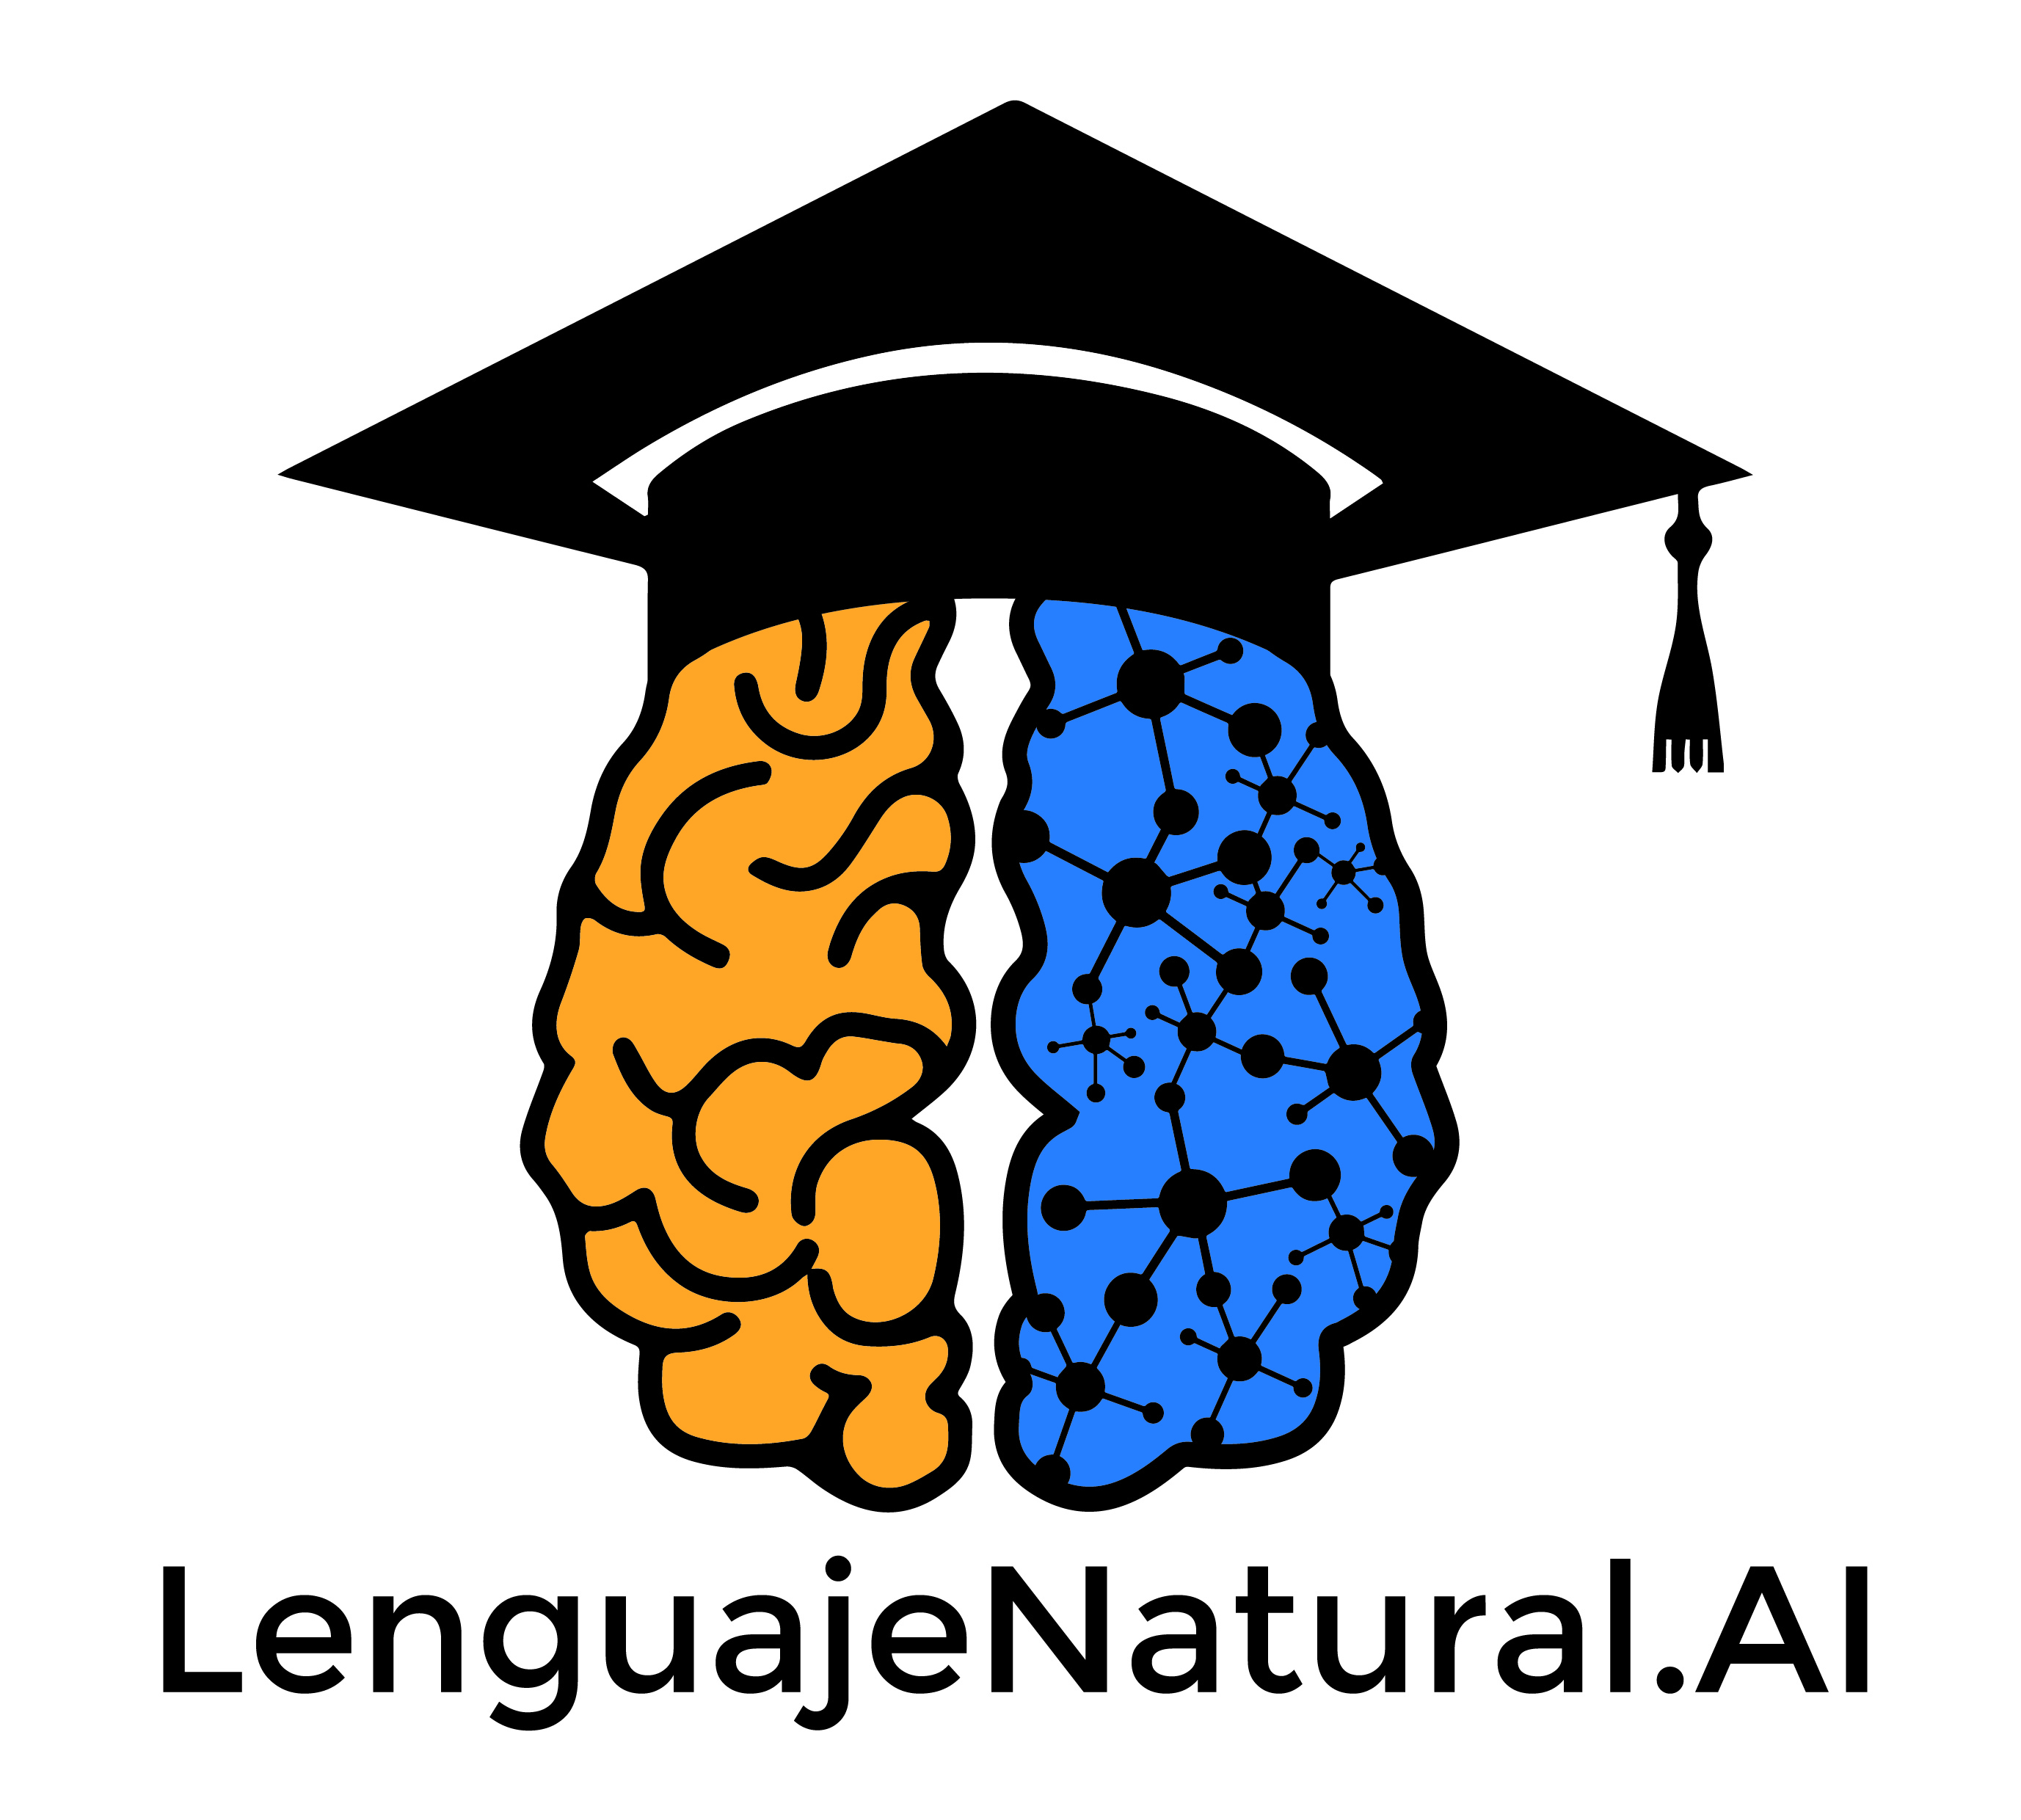 LenguajeNatural.AI